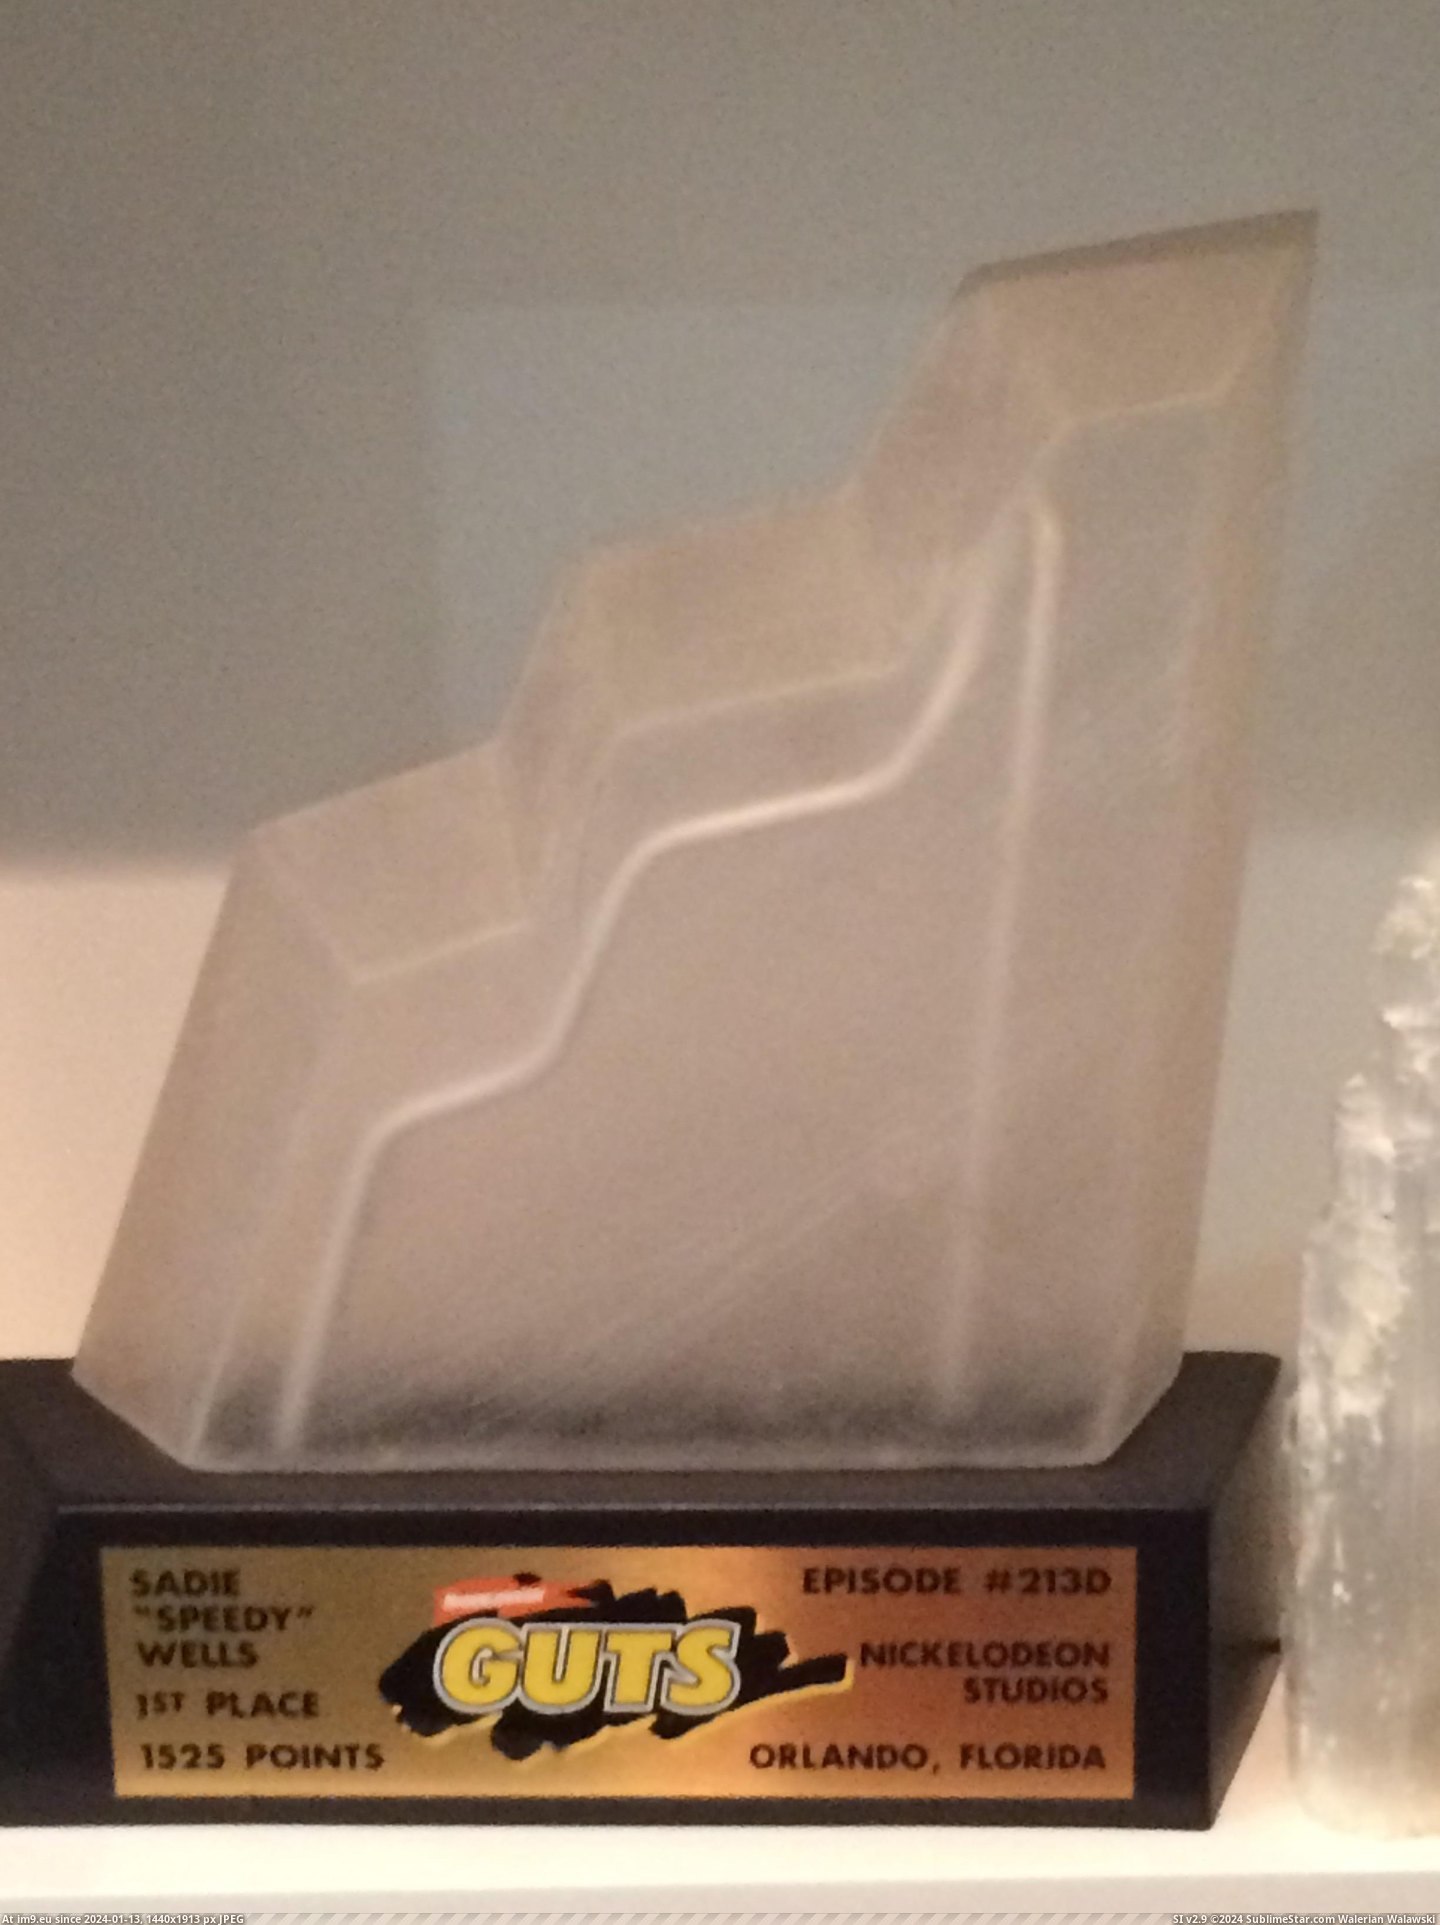 #Good #Husband #Doctor #Display #Award #Office #Hands [Pics] My husband just sent me this award on display at his doctor's office. I think he's in good hands. Pic. (Obraz z album My r/PICS favs))